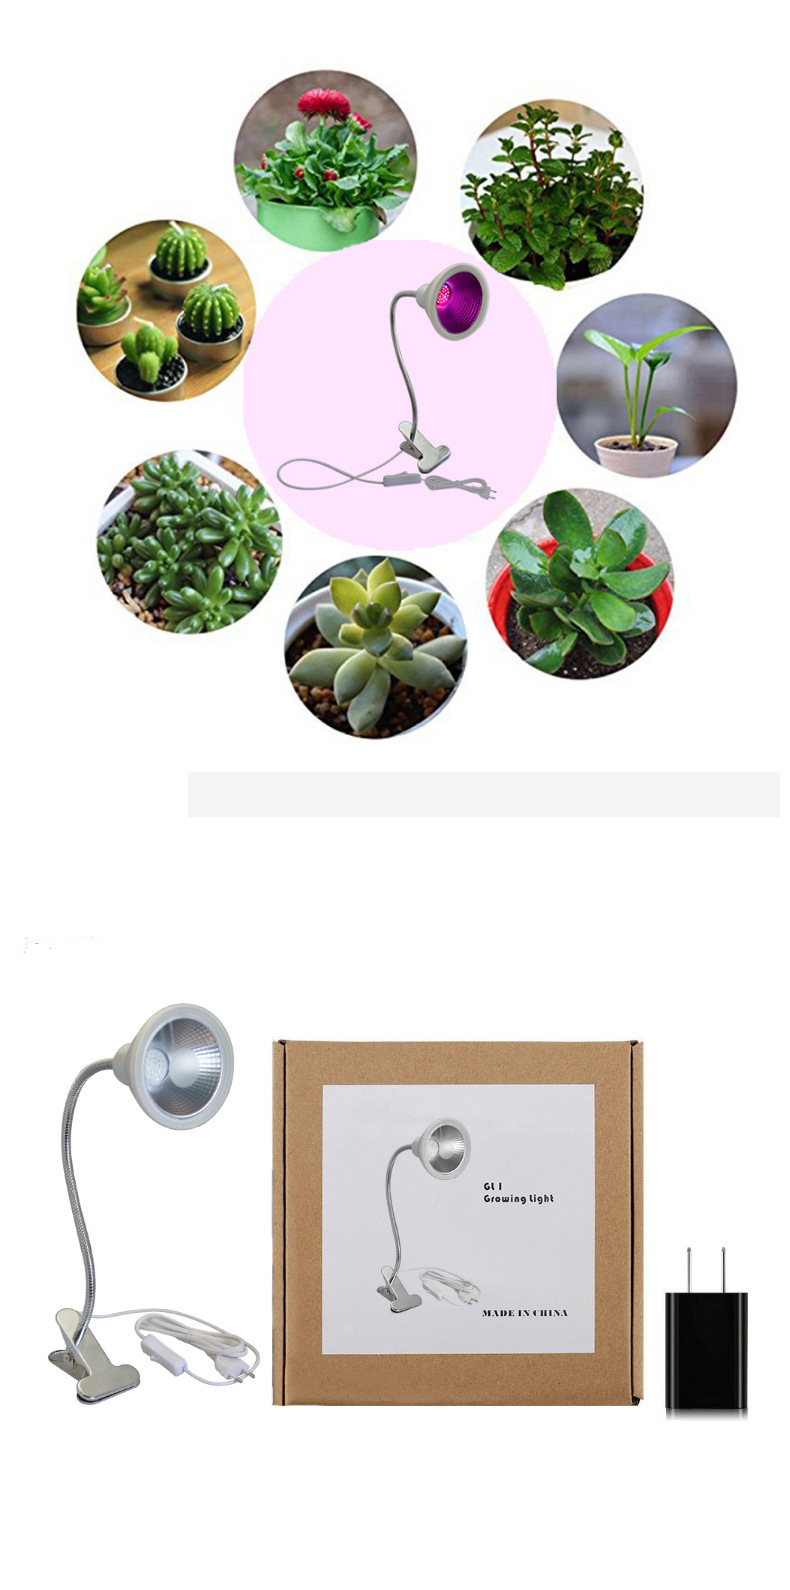 12W-Garden-Greenhouse-Full-Spectrum-LED-Grow-Light-Single-head-Clamp-Plants-Growth-Lamp-Flexible-Goo-1258587-9